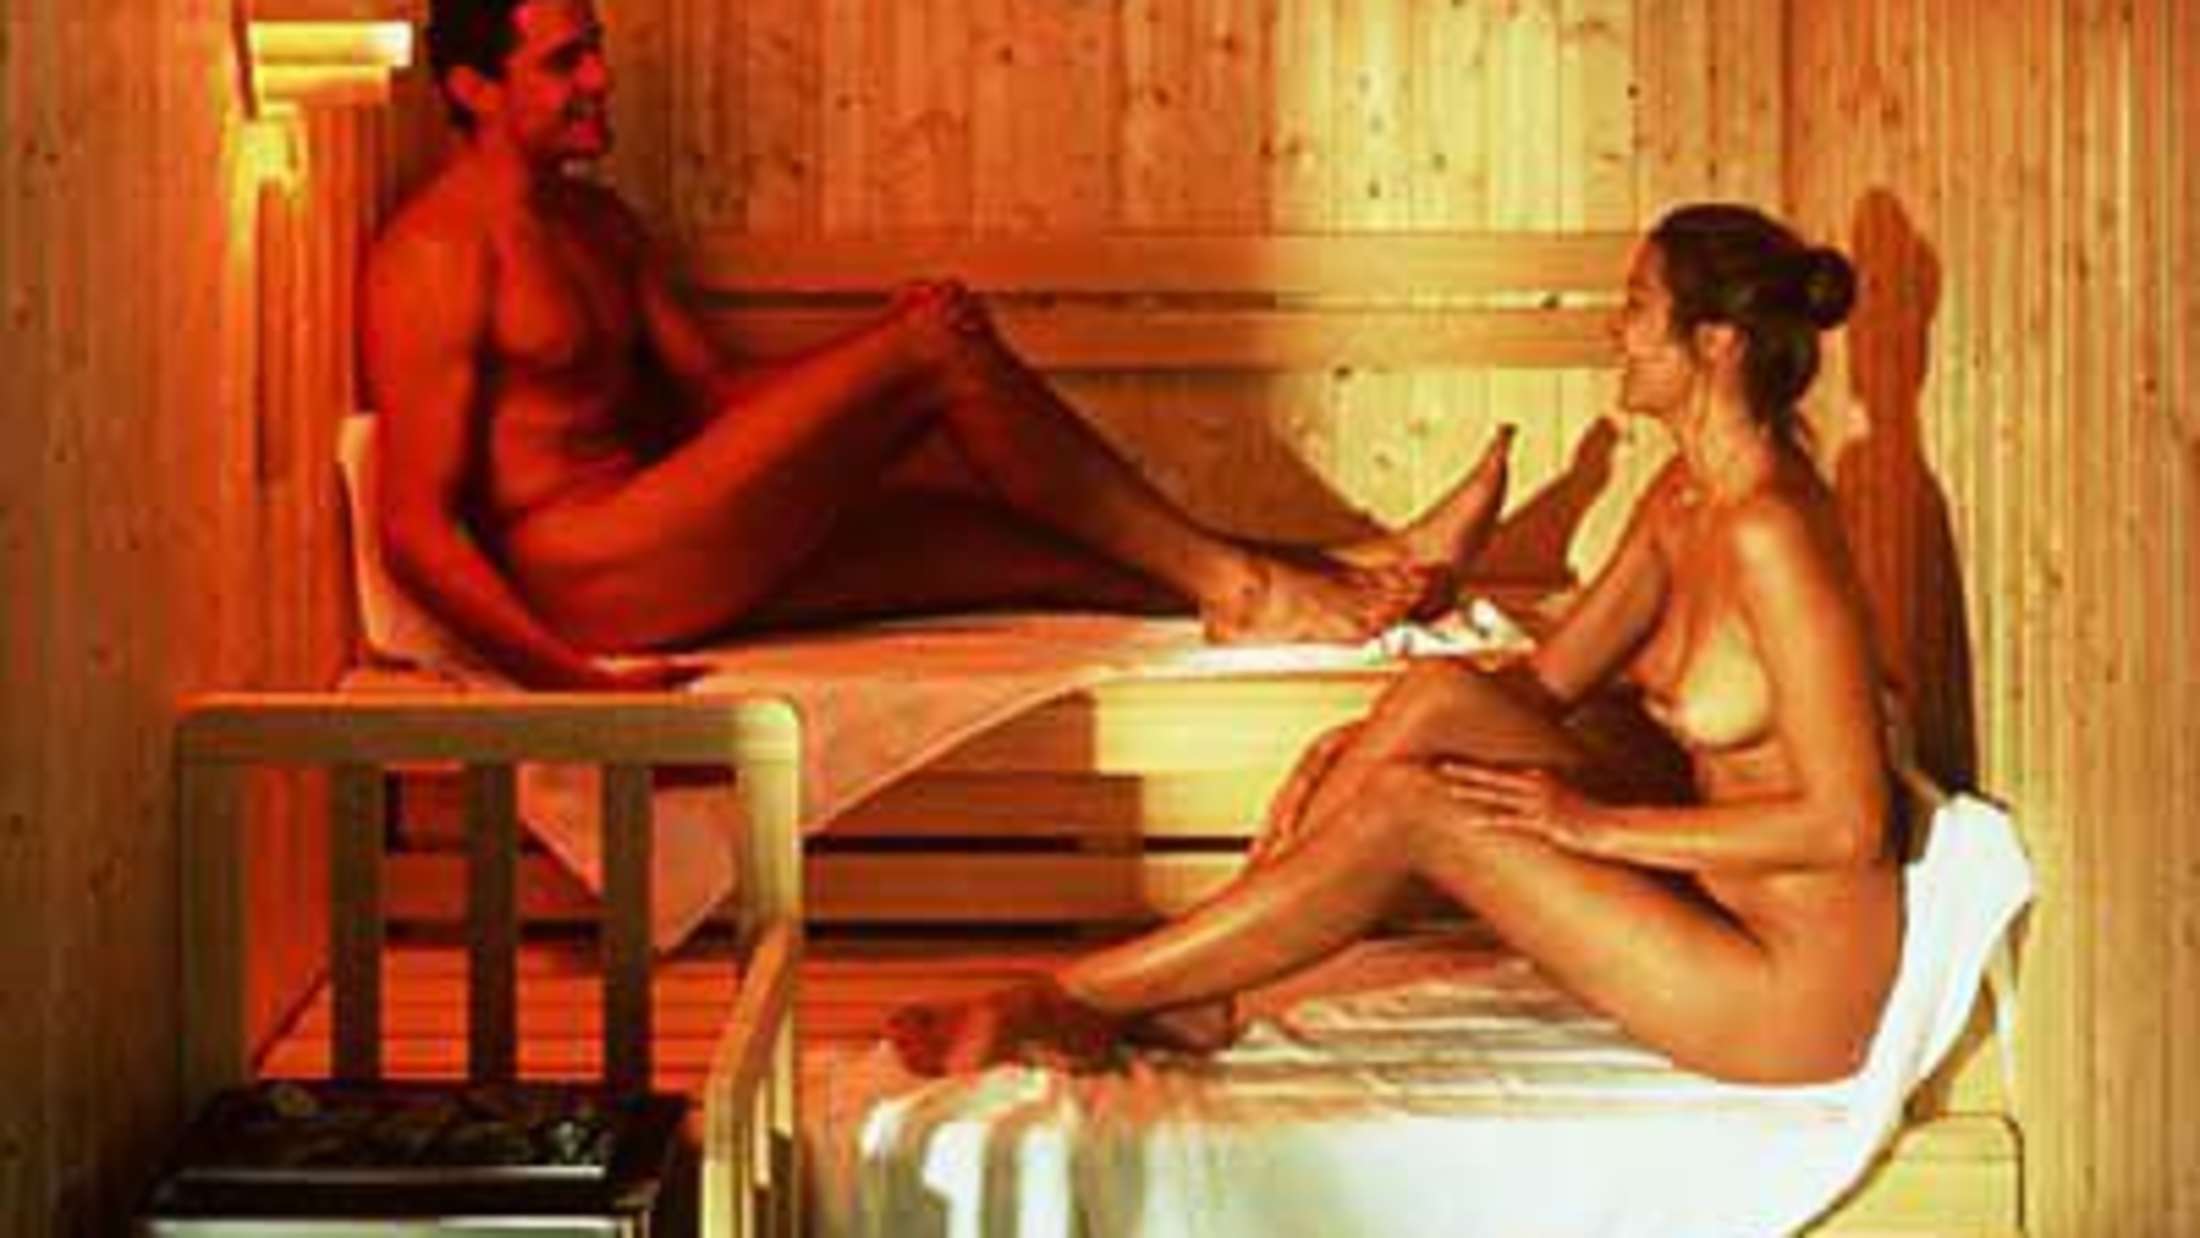 German sauna nudes